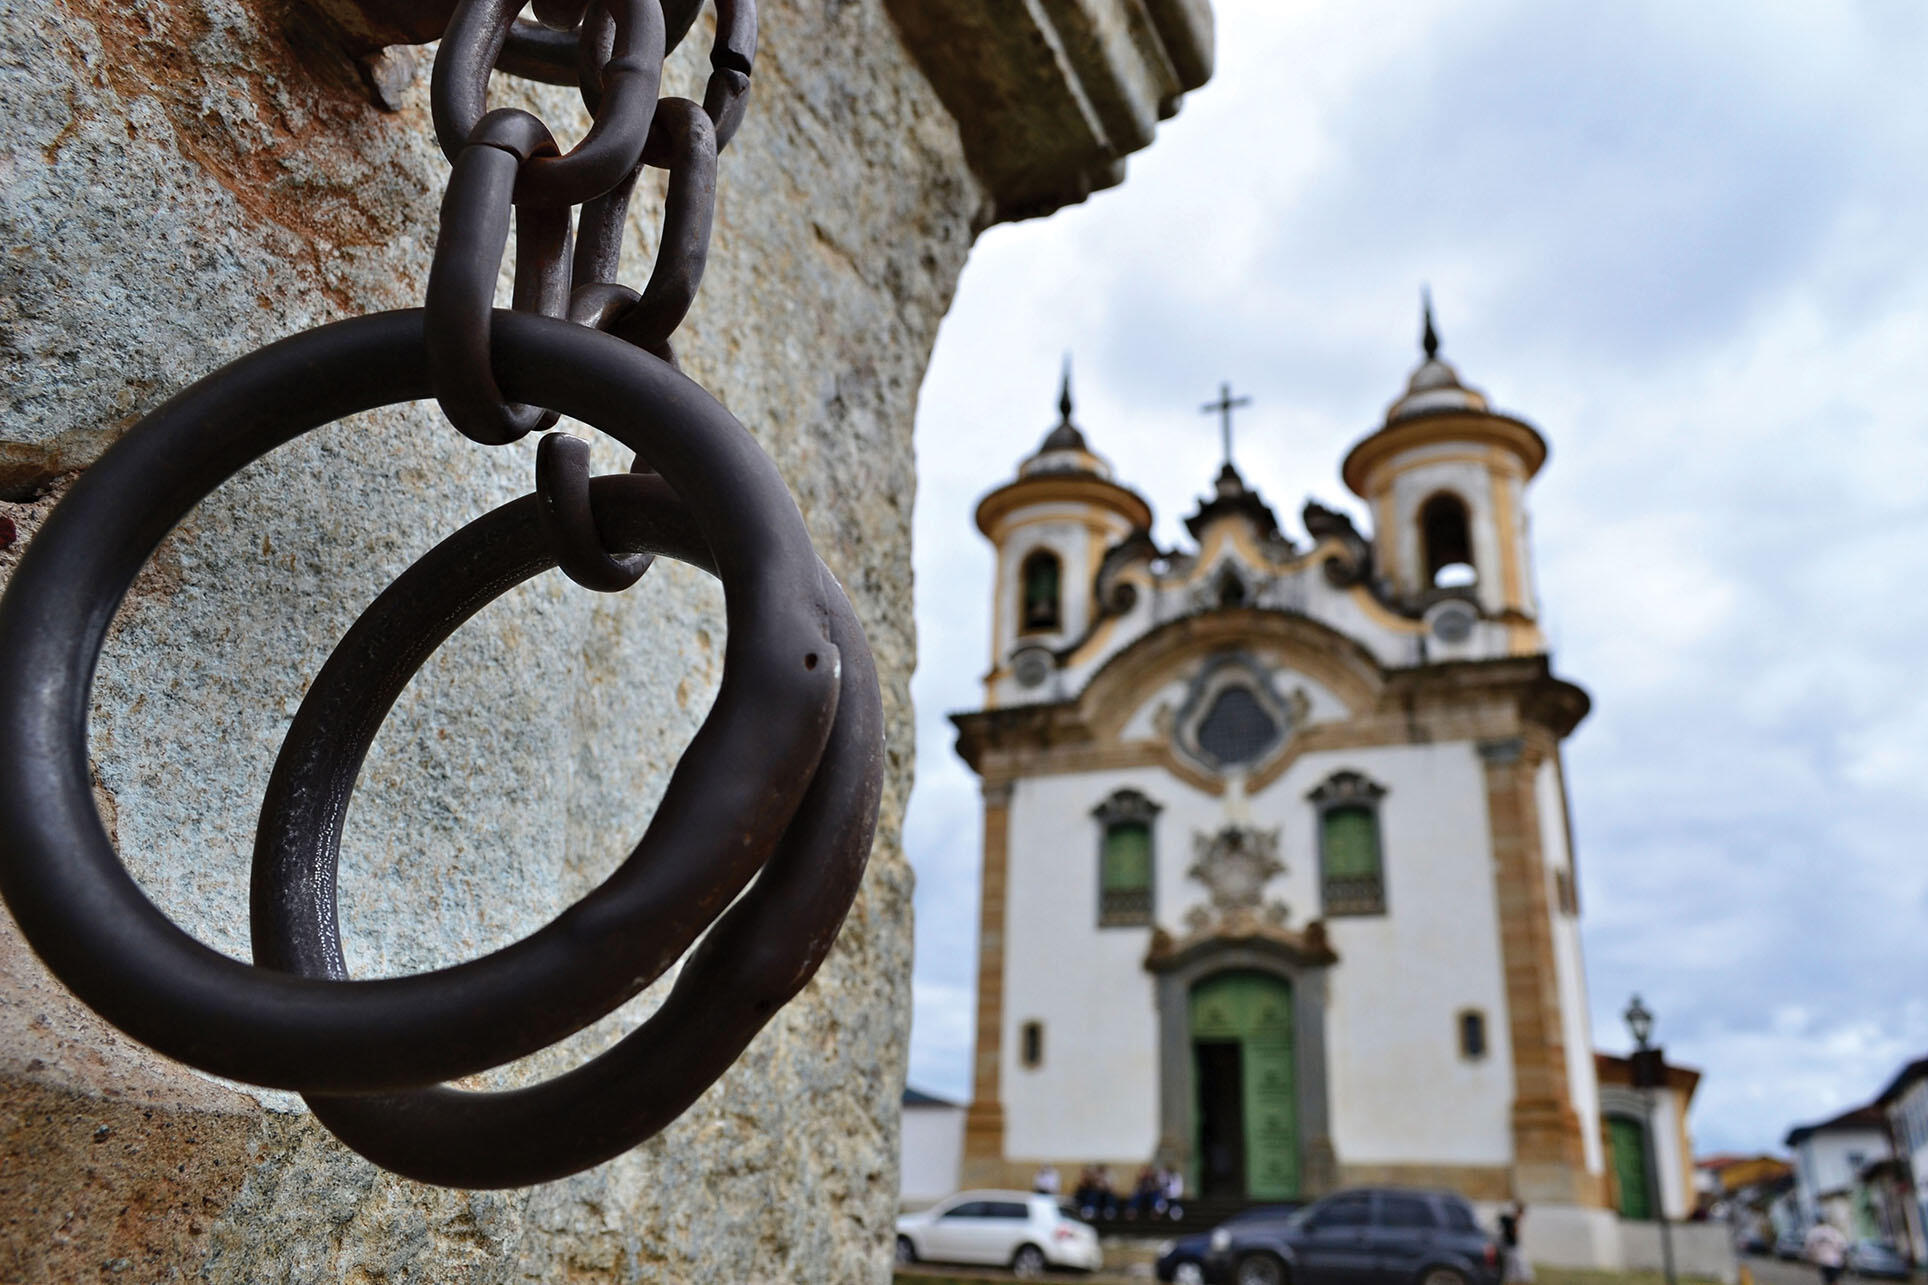 Slave manacles outside a church in Minas Gerais. (Photo by Leolopesmiranda.)